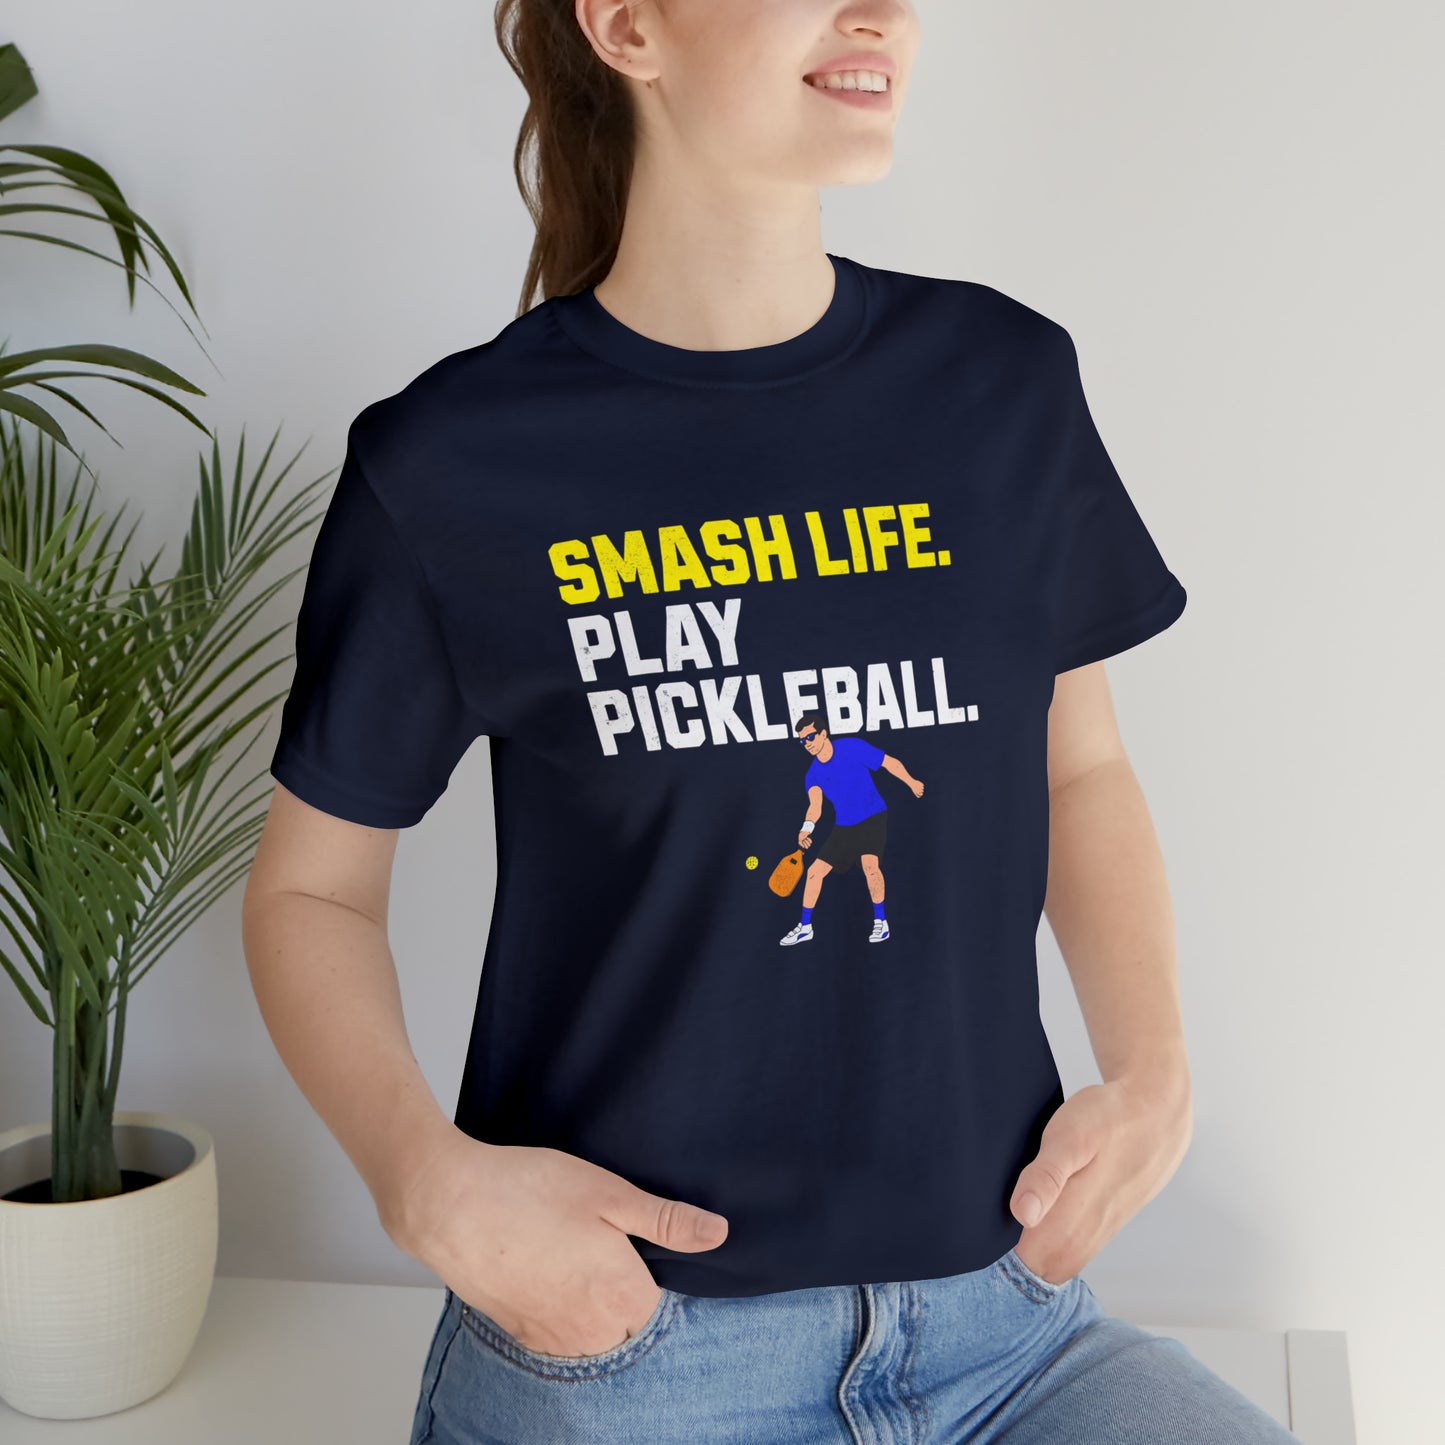 Smash Life, Play Pickleball T-Shirt